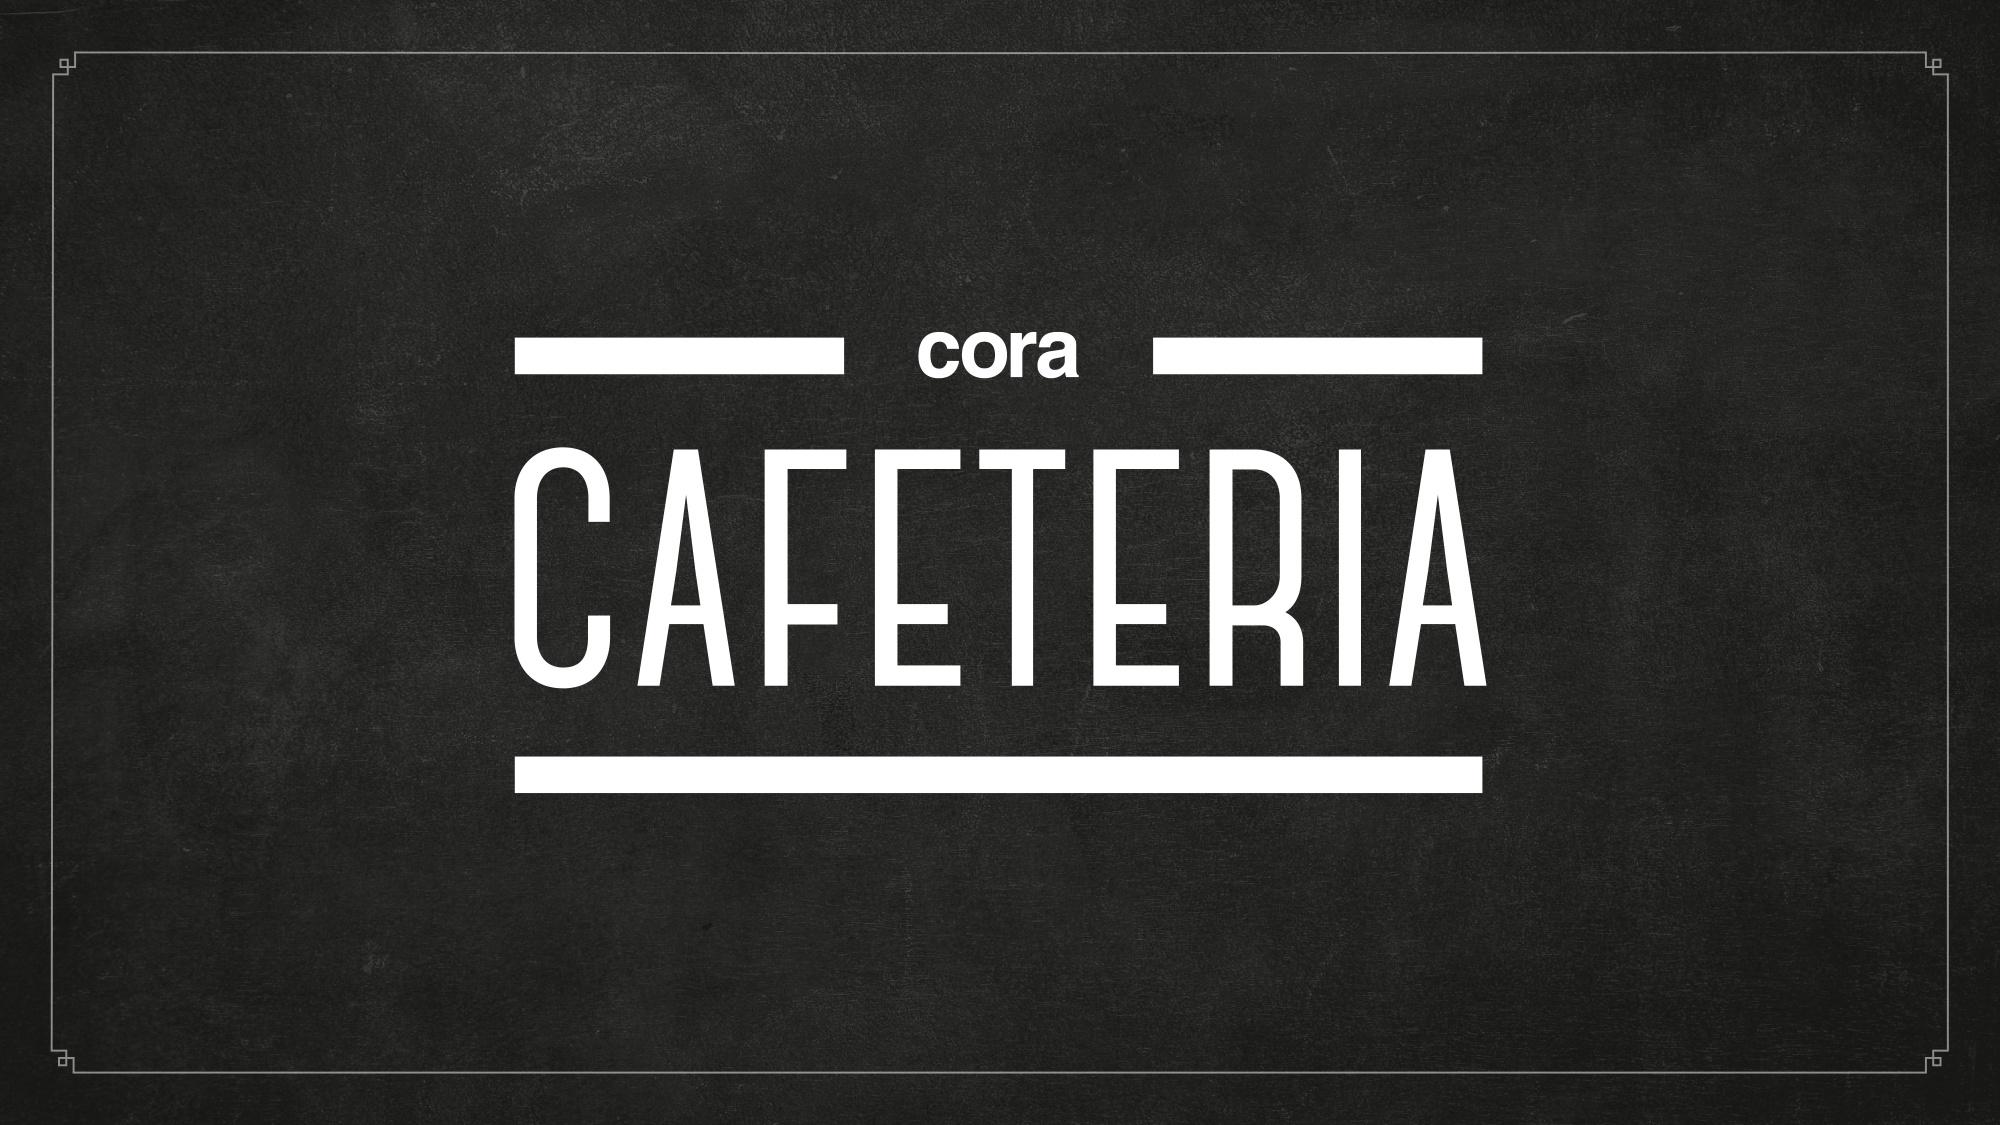 La Table Cora Cafeteria Publier